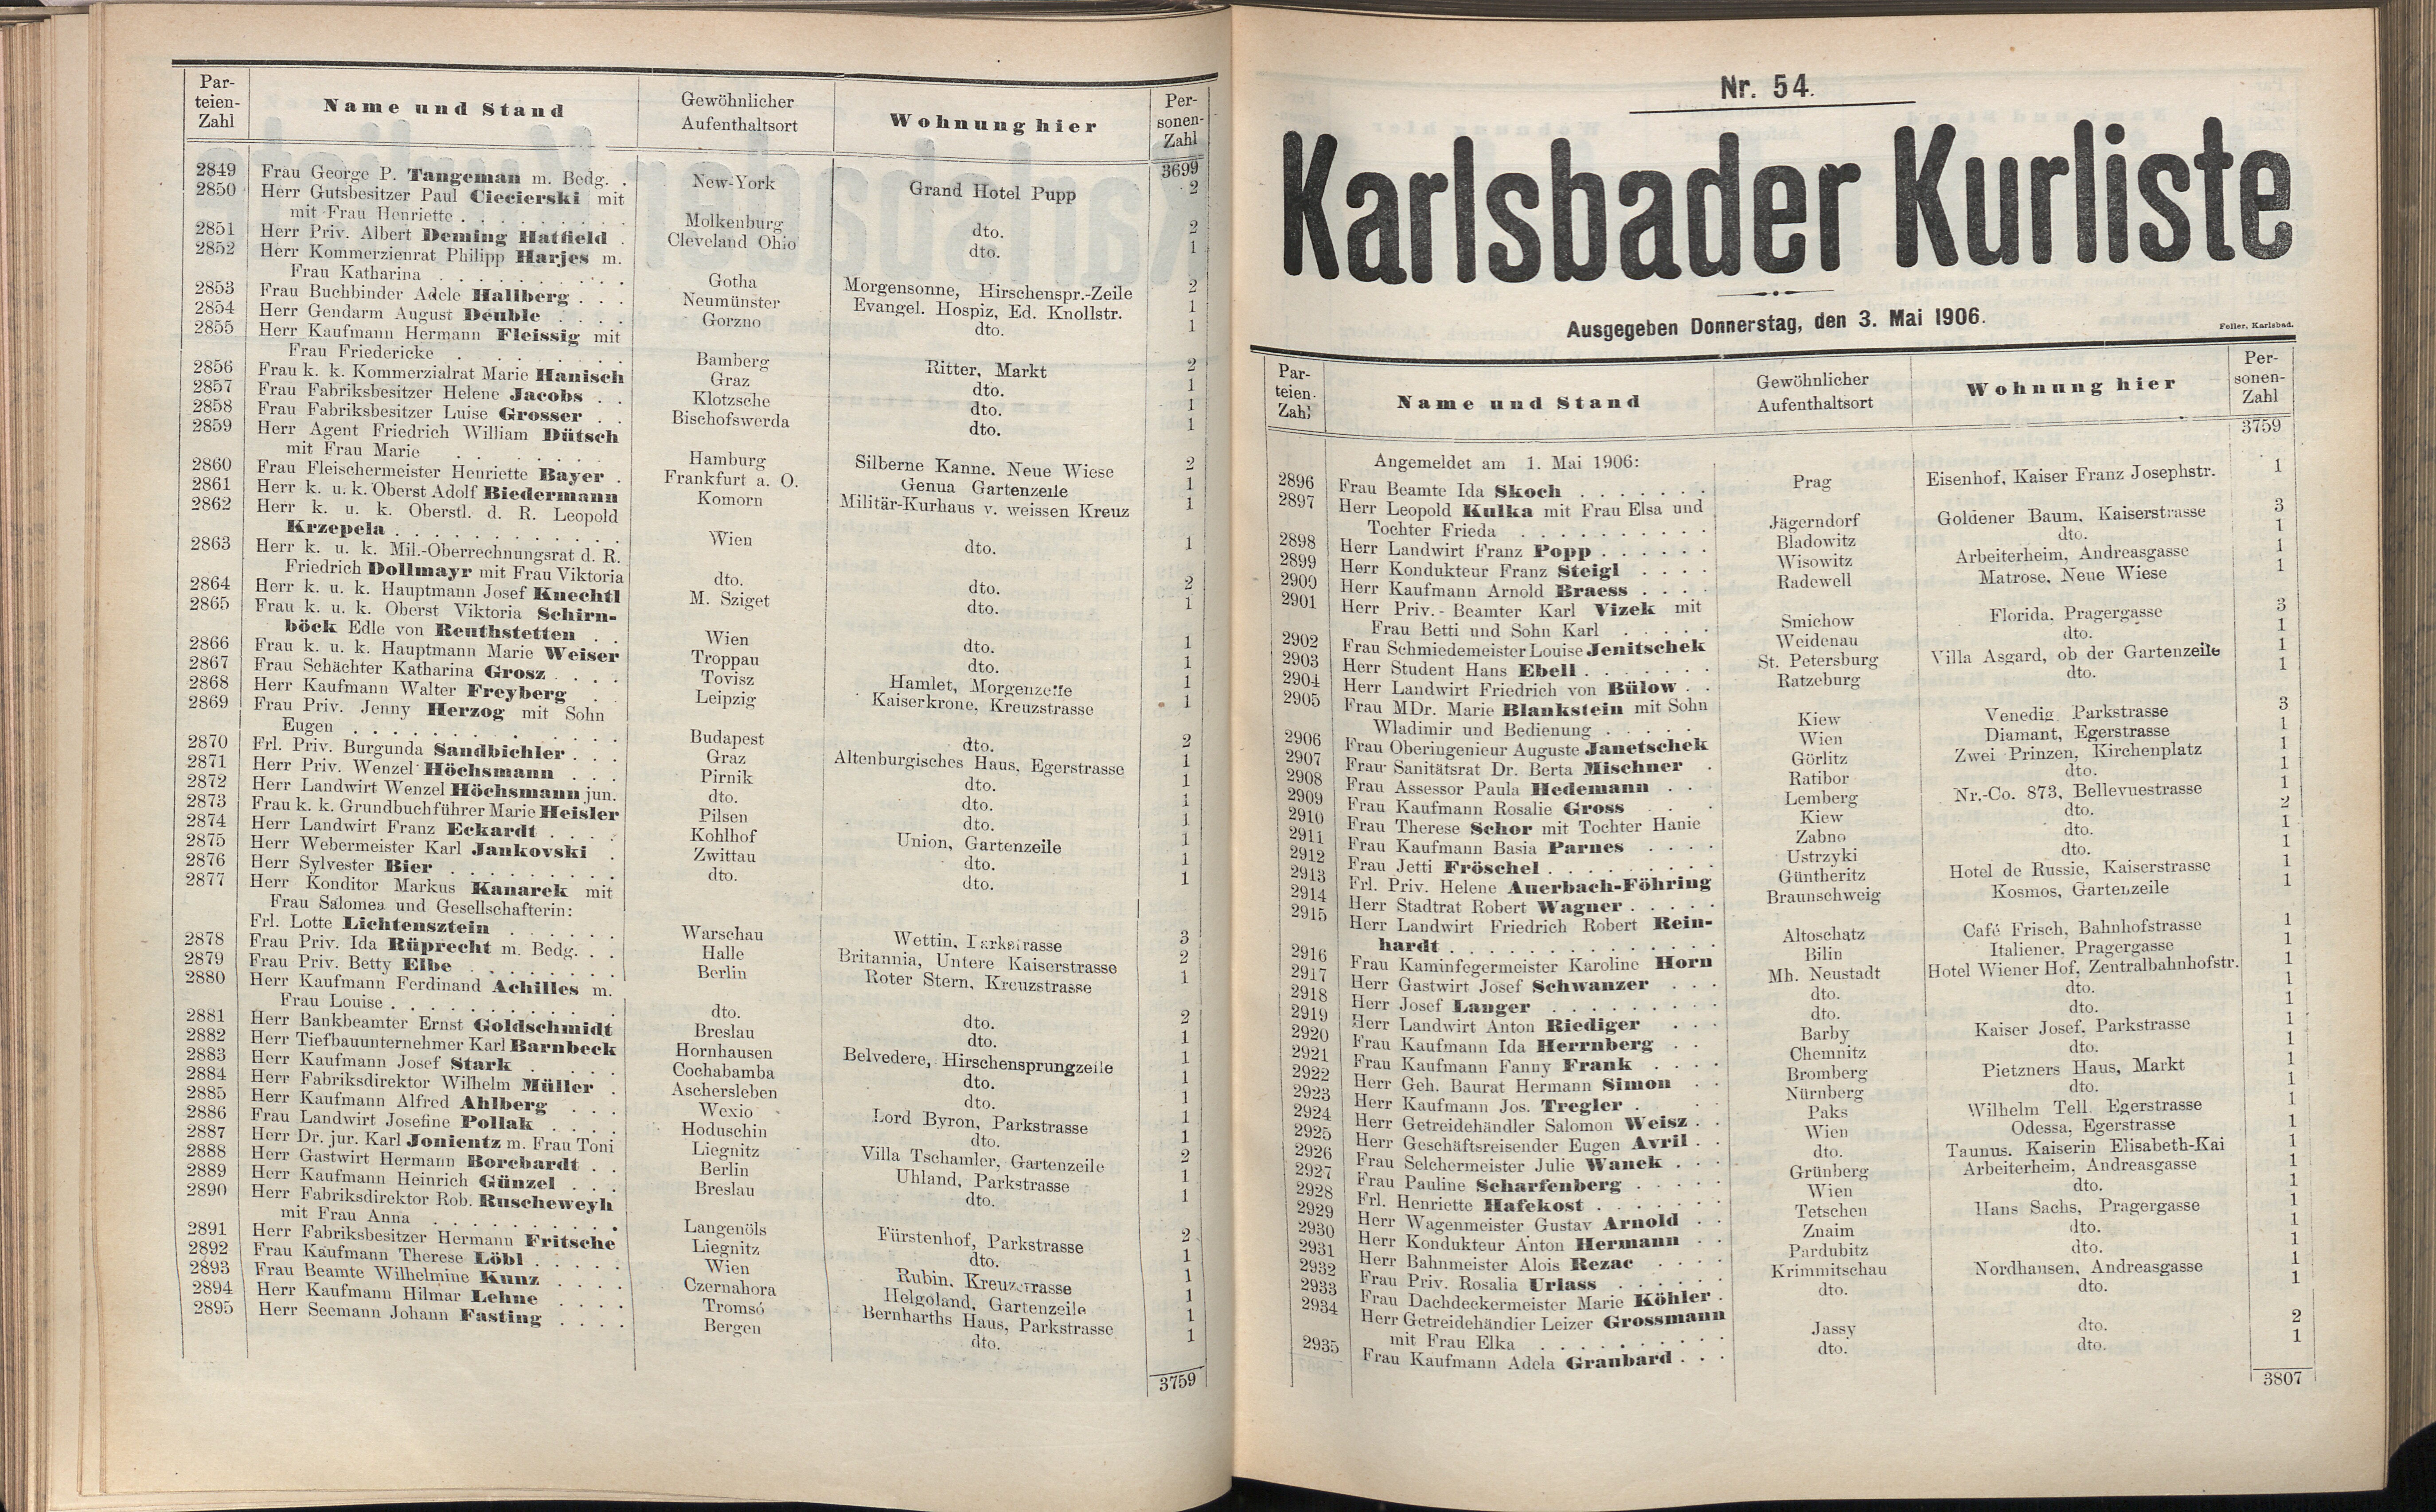 167. soap-kv_knihovna_karlsbader-kurliste-1906_1680